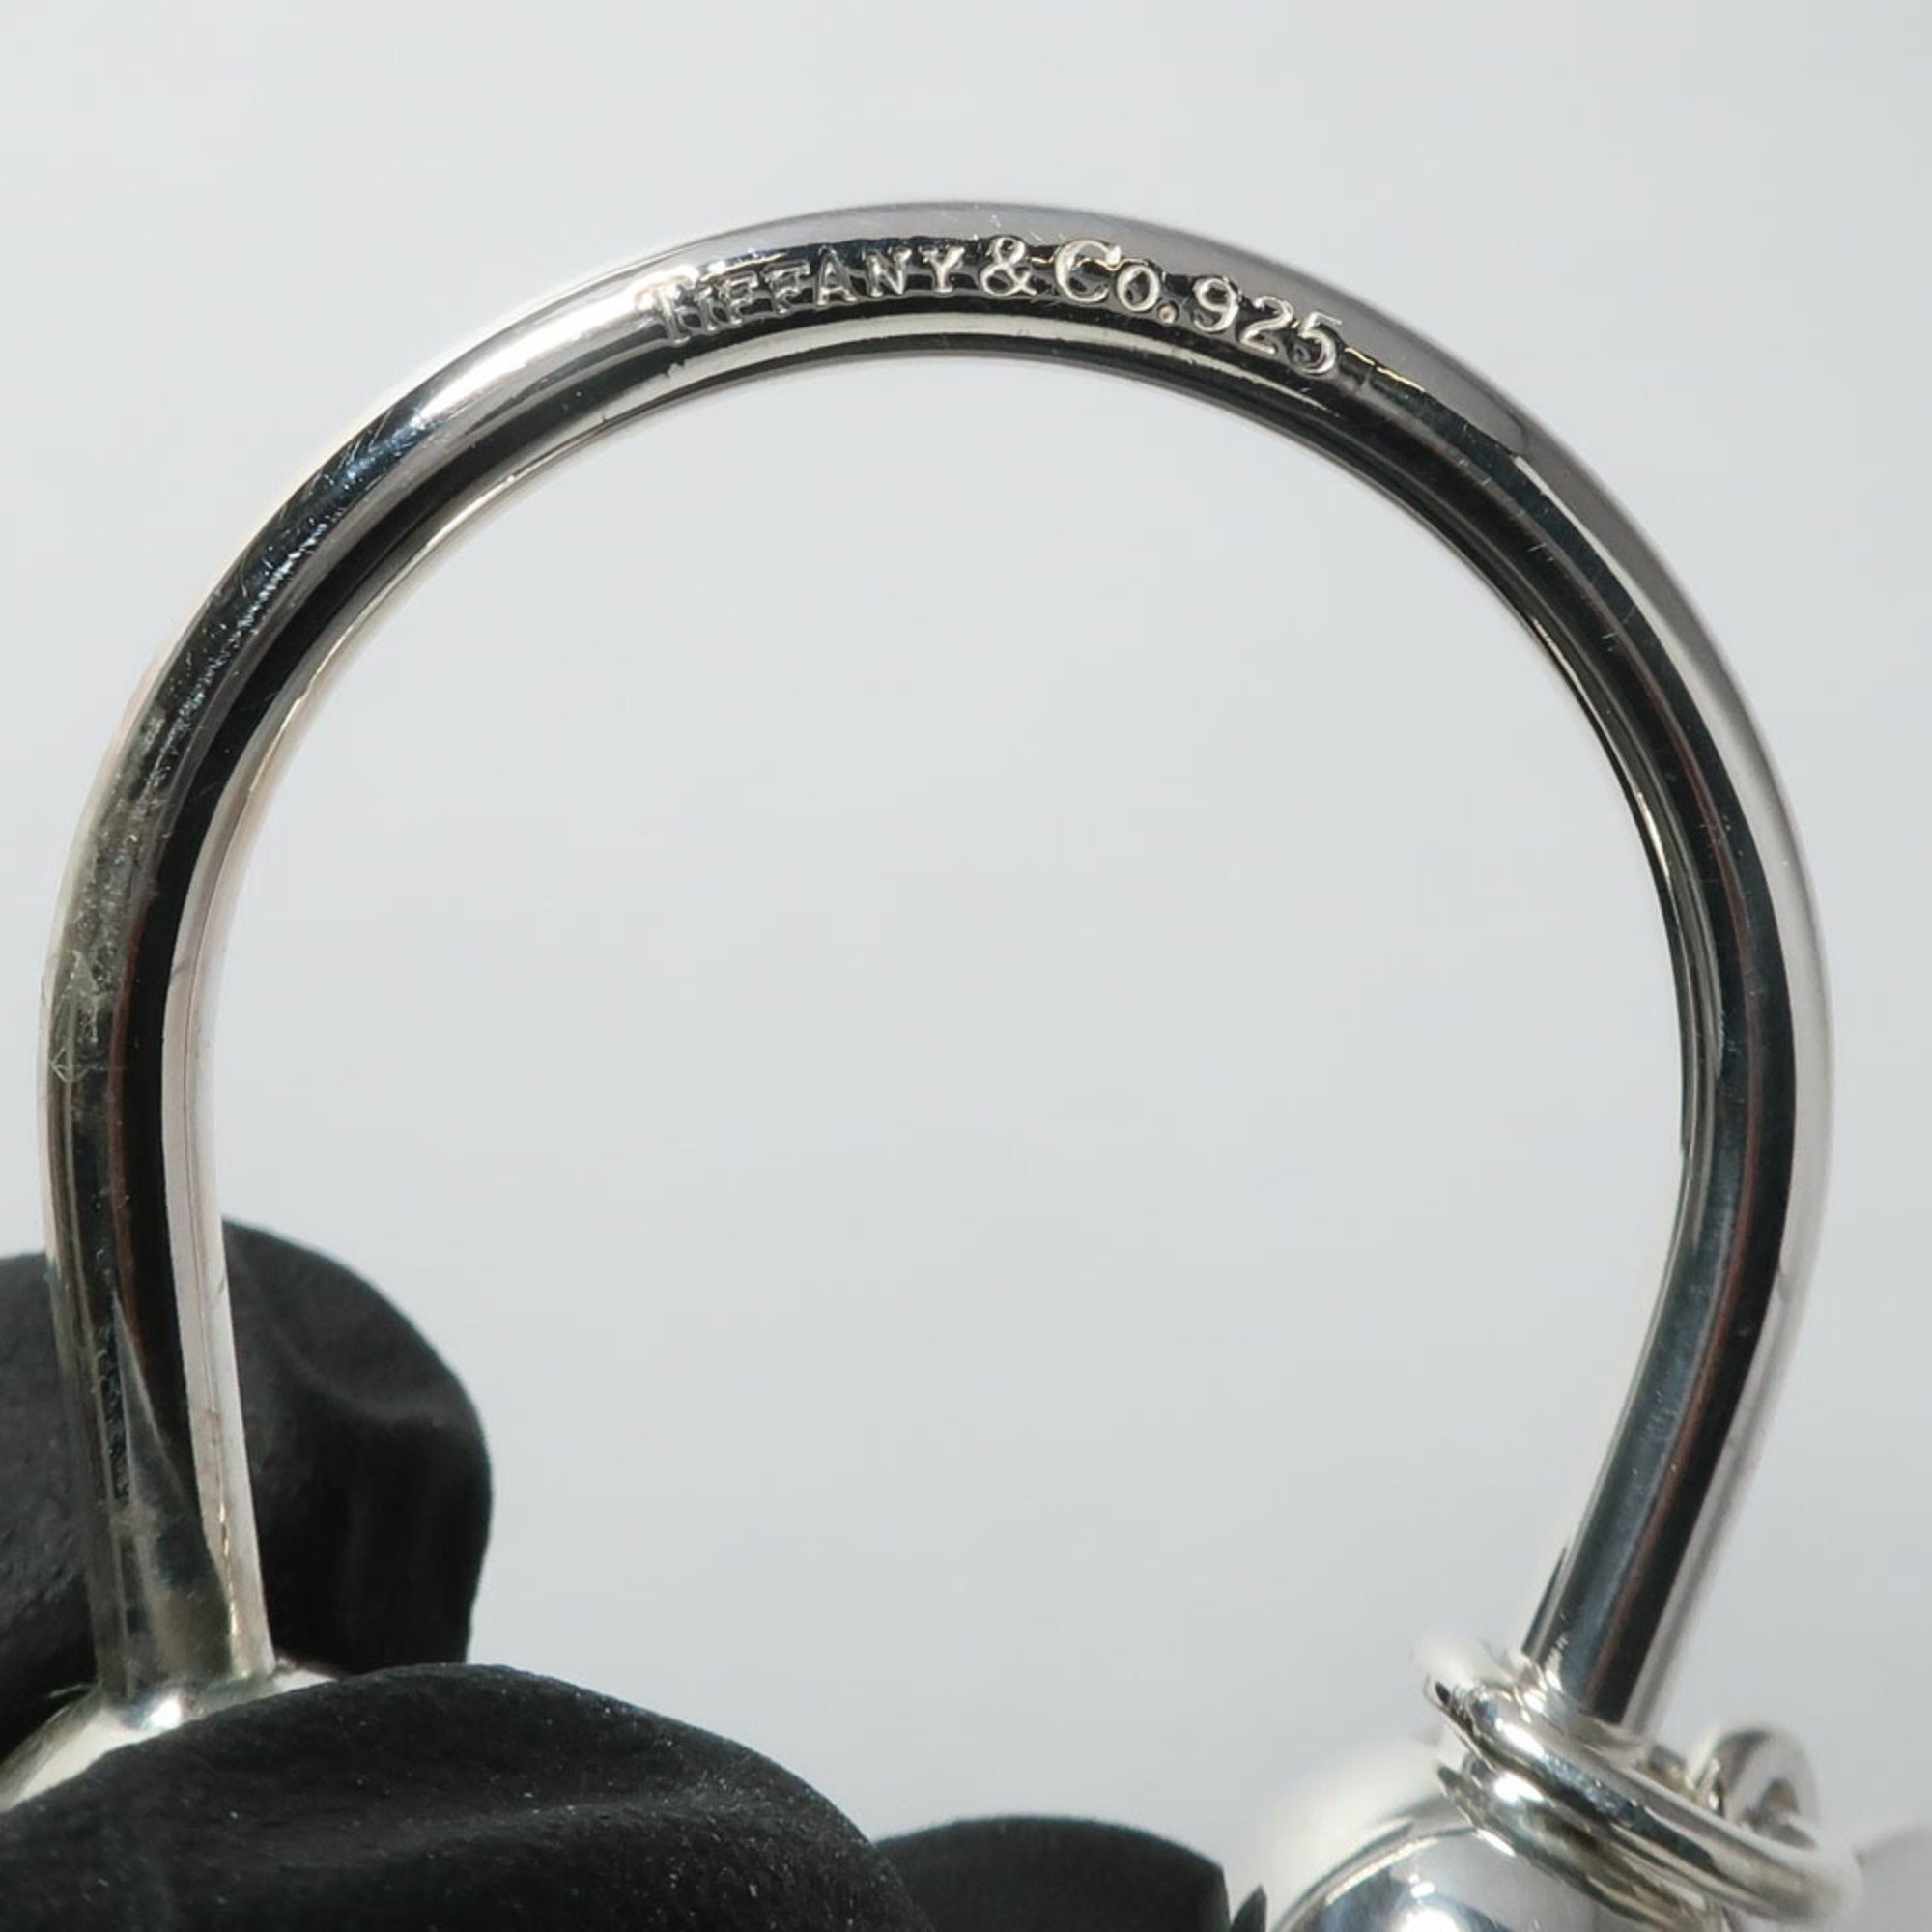 Tiffany round tag 925 silver key holder